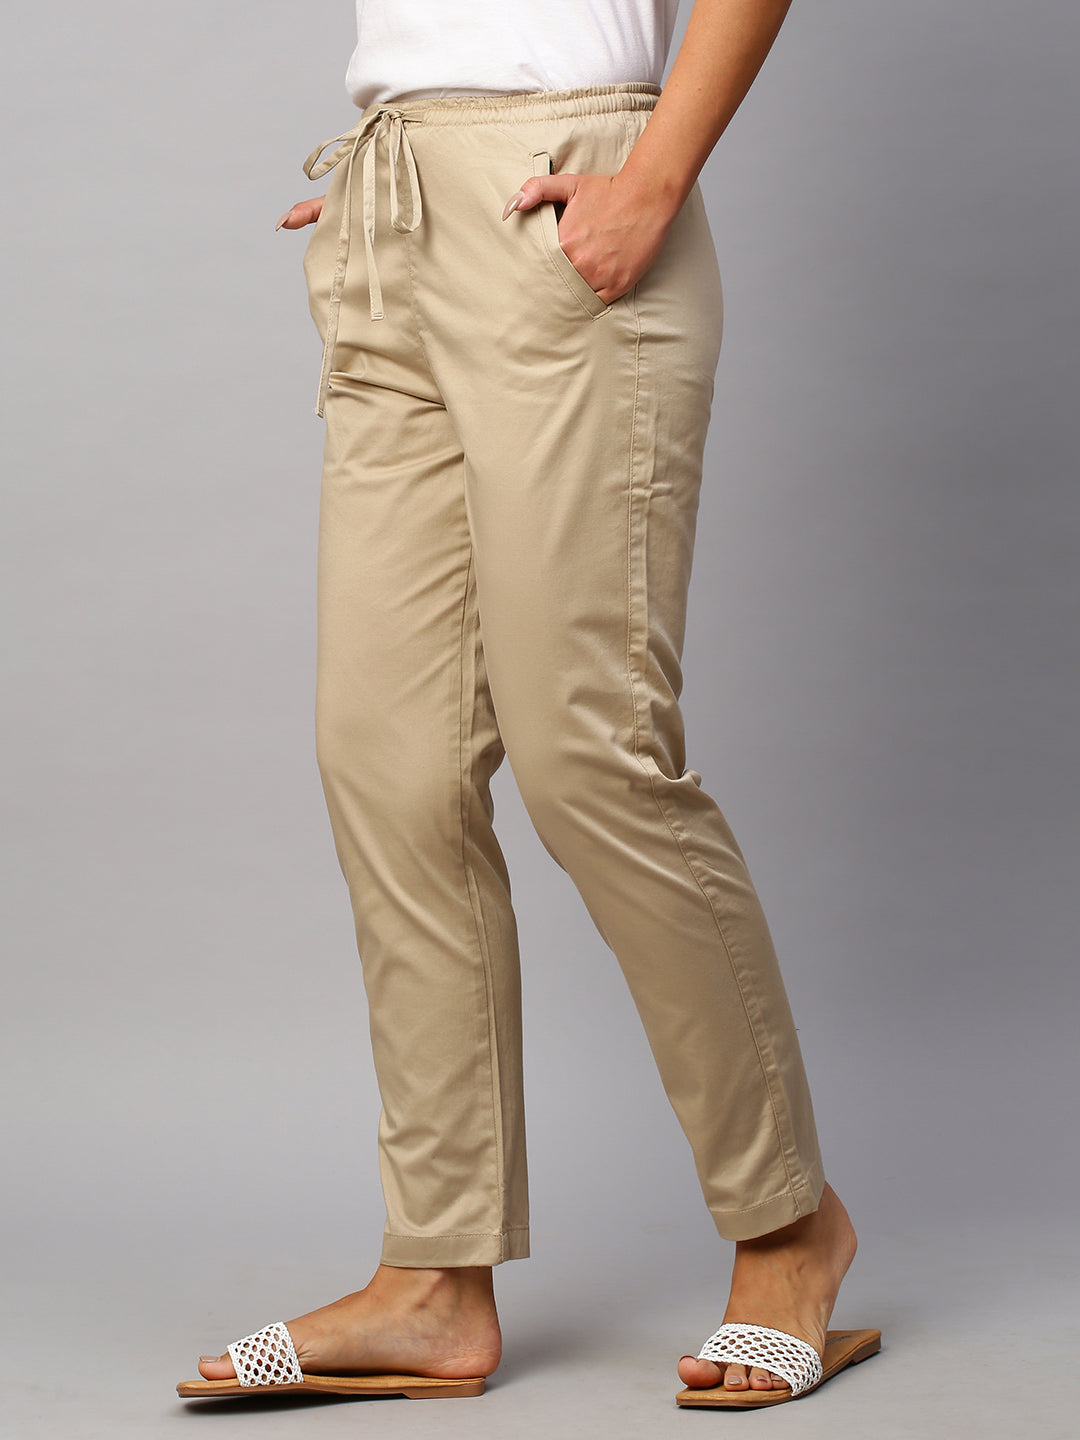 Women's Khaki Cotton Lycra Regular Fit Pant